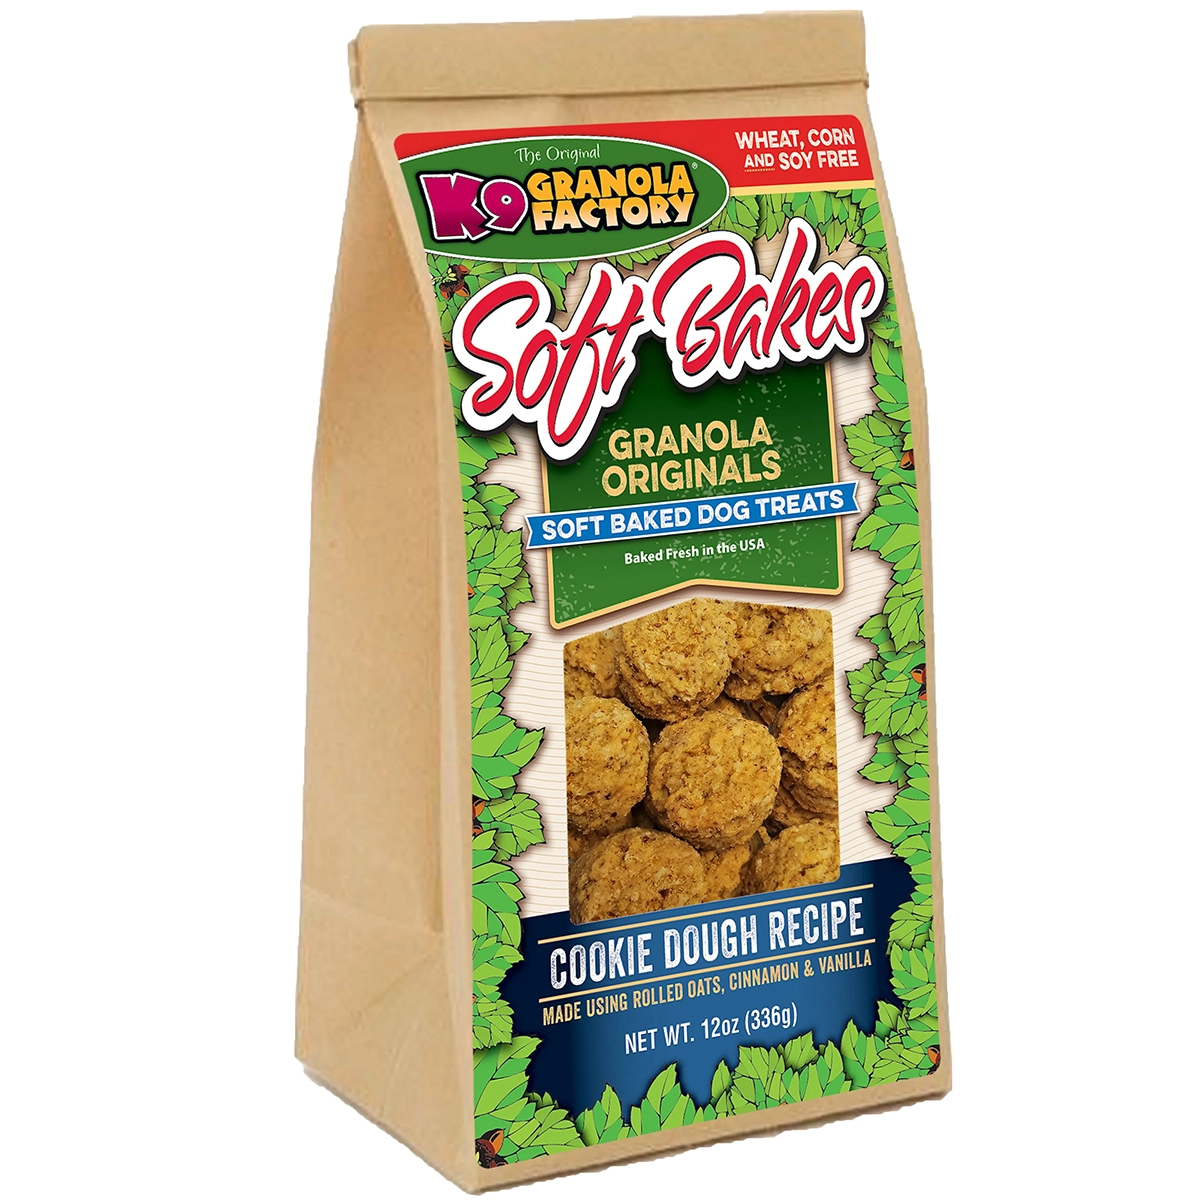 K9 Granola Factory Soft Bakes Dog Treats - Cookie Dough